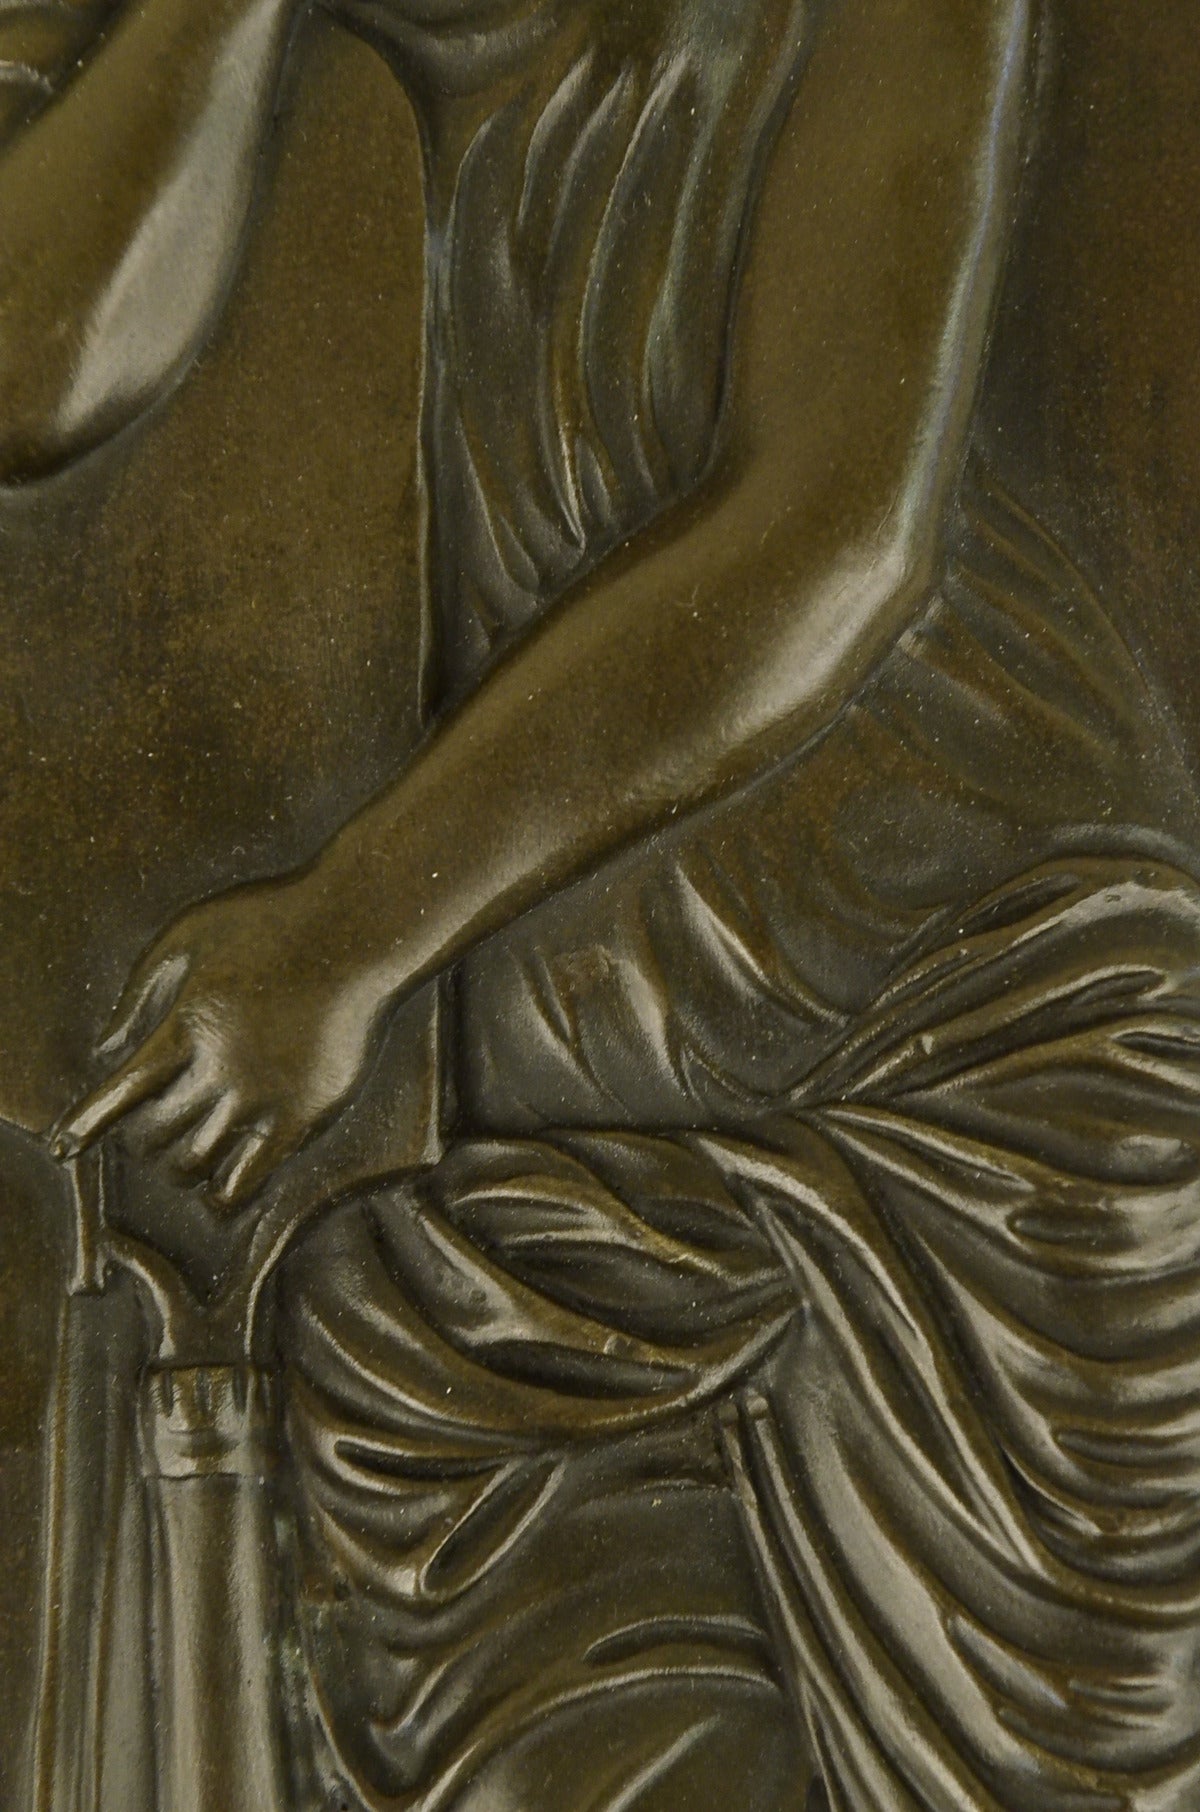 Handcrafted bronze sculpture SALE Jug With Lady Nouveau Art Metal Real Original